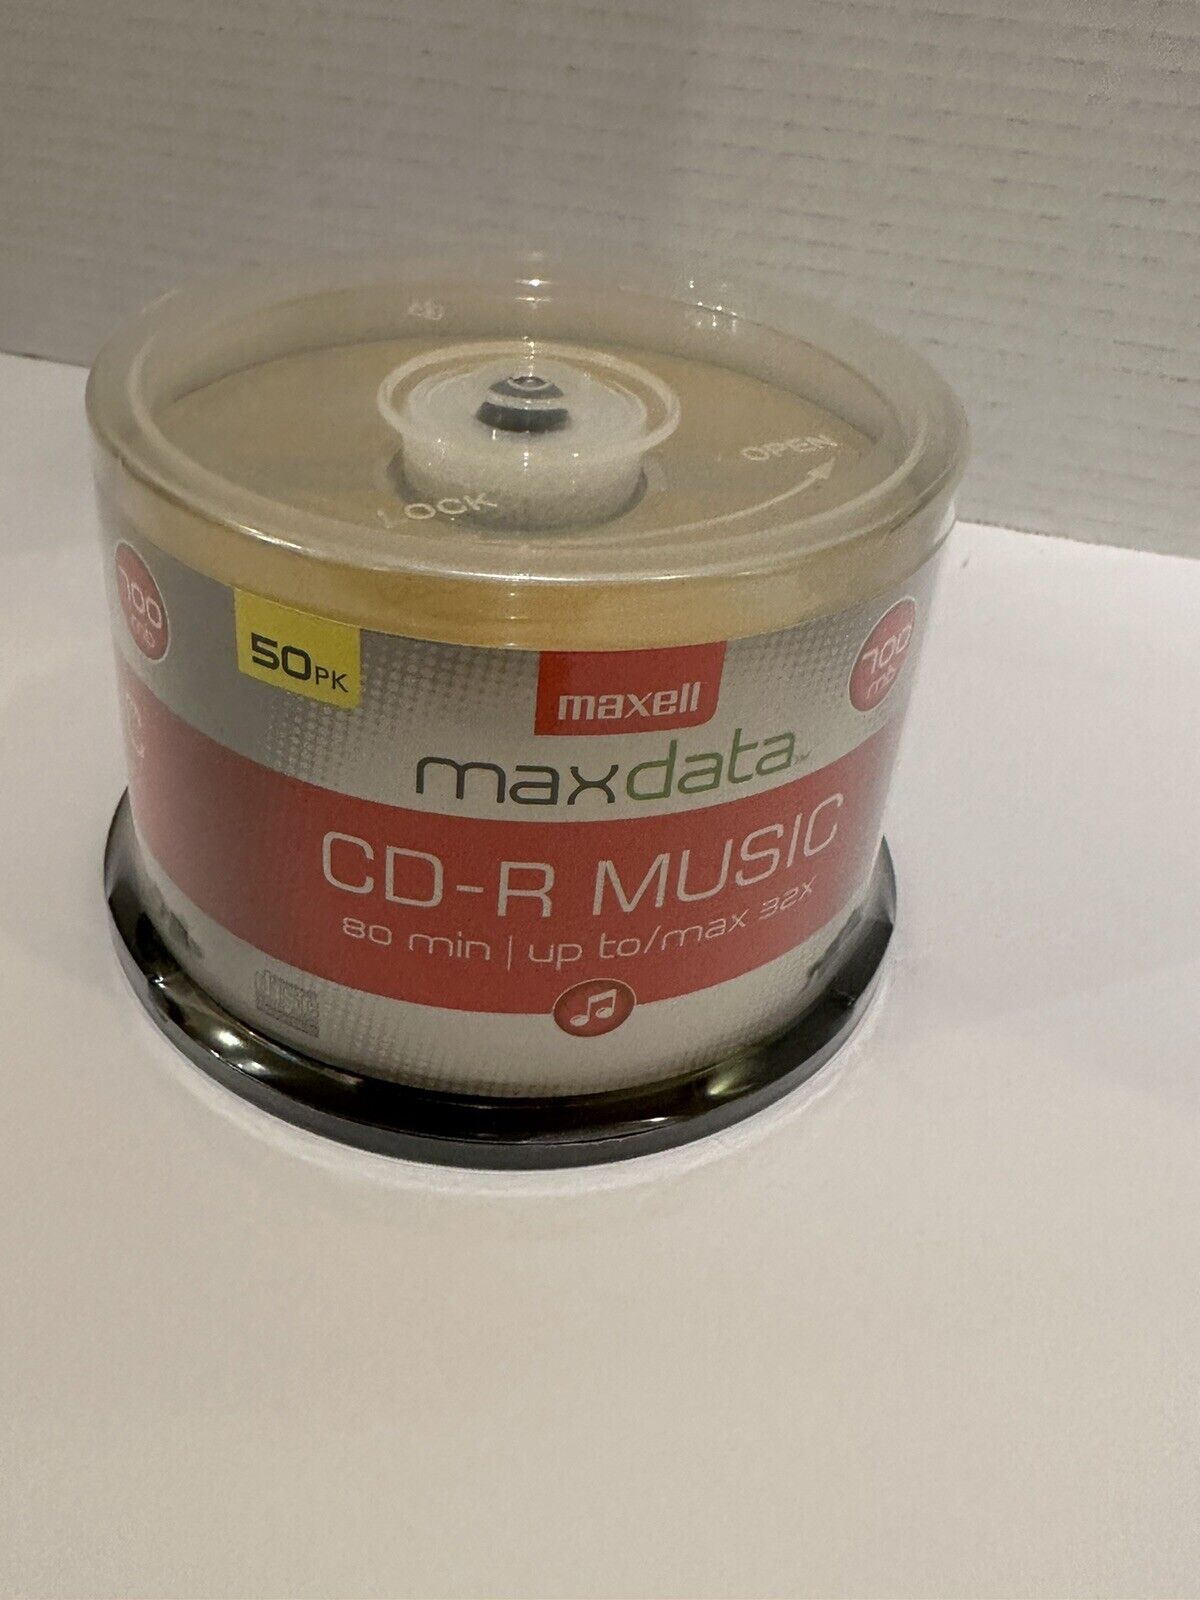 Maxell Maxdata 700mb - CDR 50PK 80-Minute Music CD-Rs 50pk New Sealed 